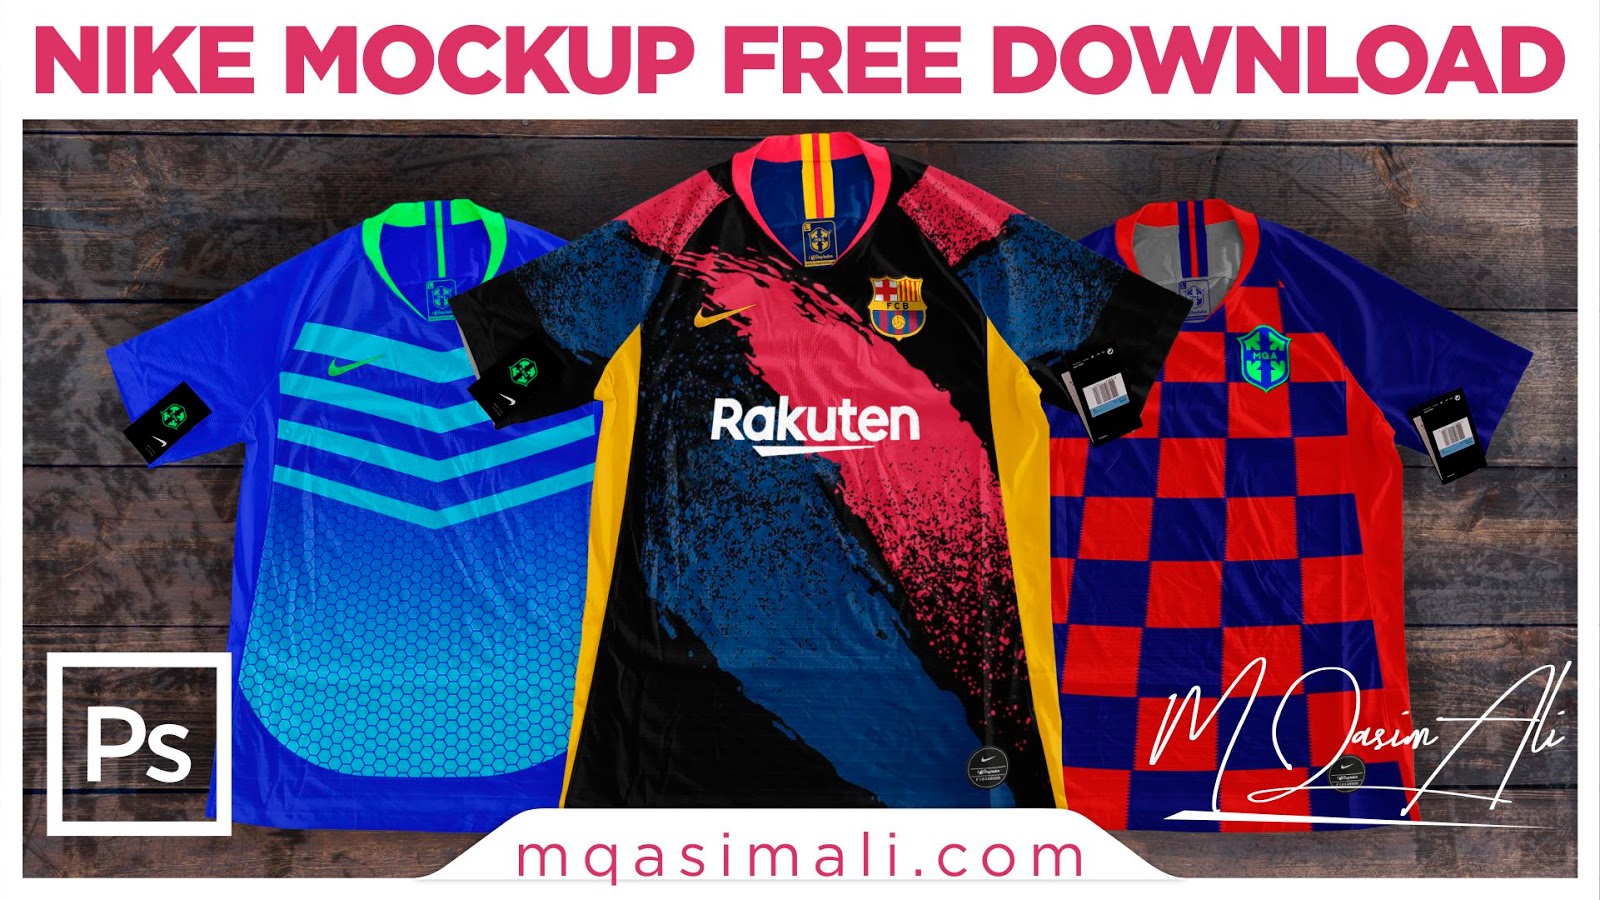 Download Nike Football Shirt Mockup Psd Template Free Download By M Qasim Ali M Qasim Ali Sports Templates For Photoshop